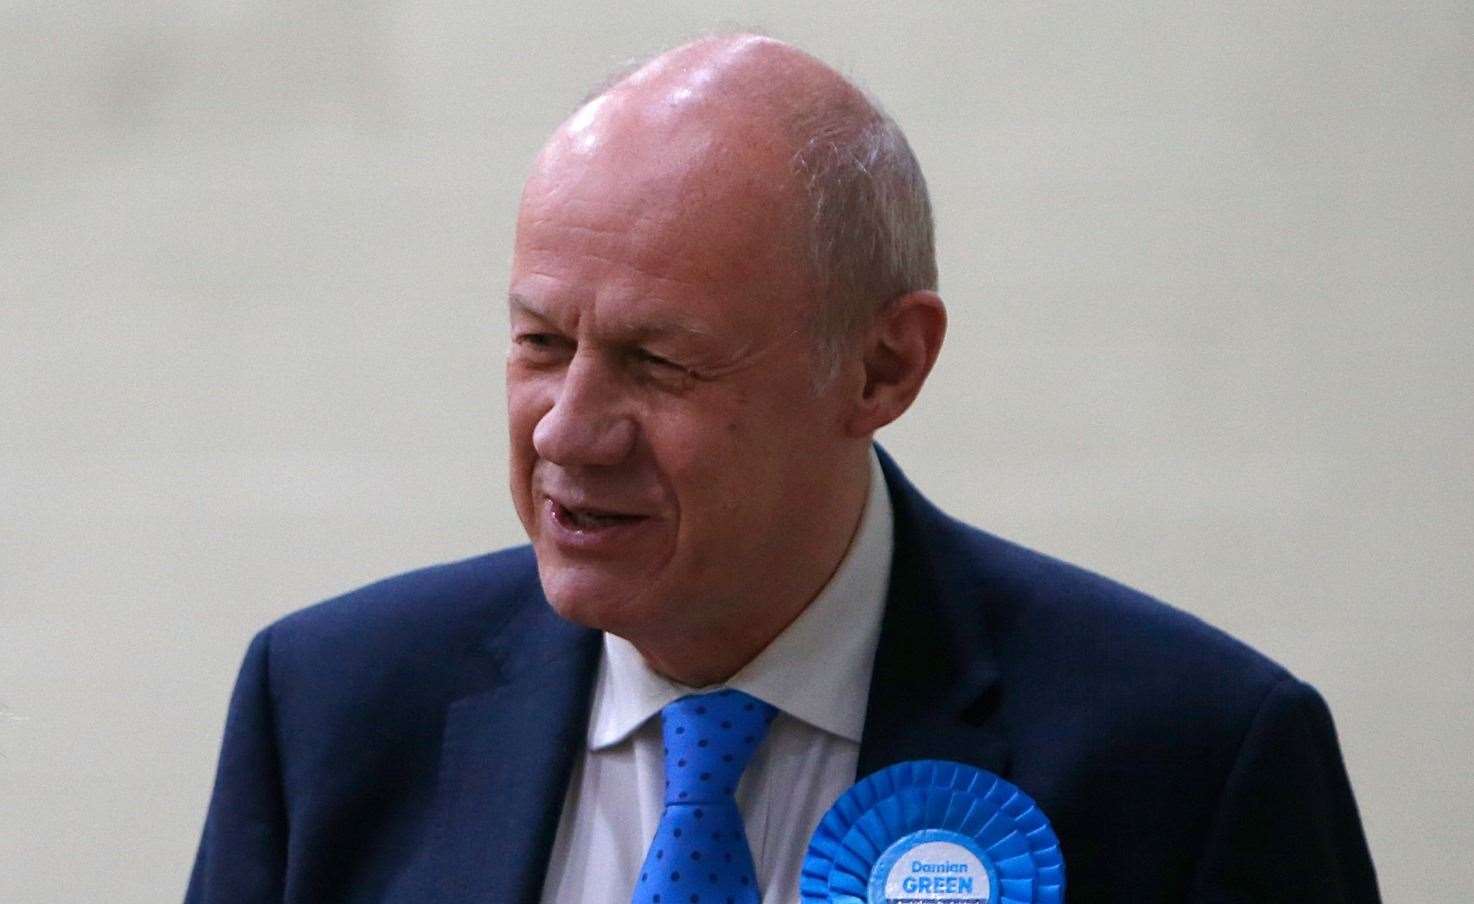 Damian Green has been Ashford's MP since 1997